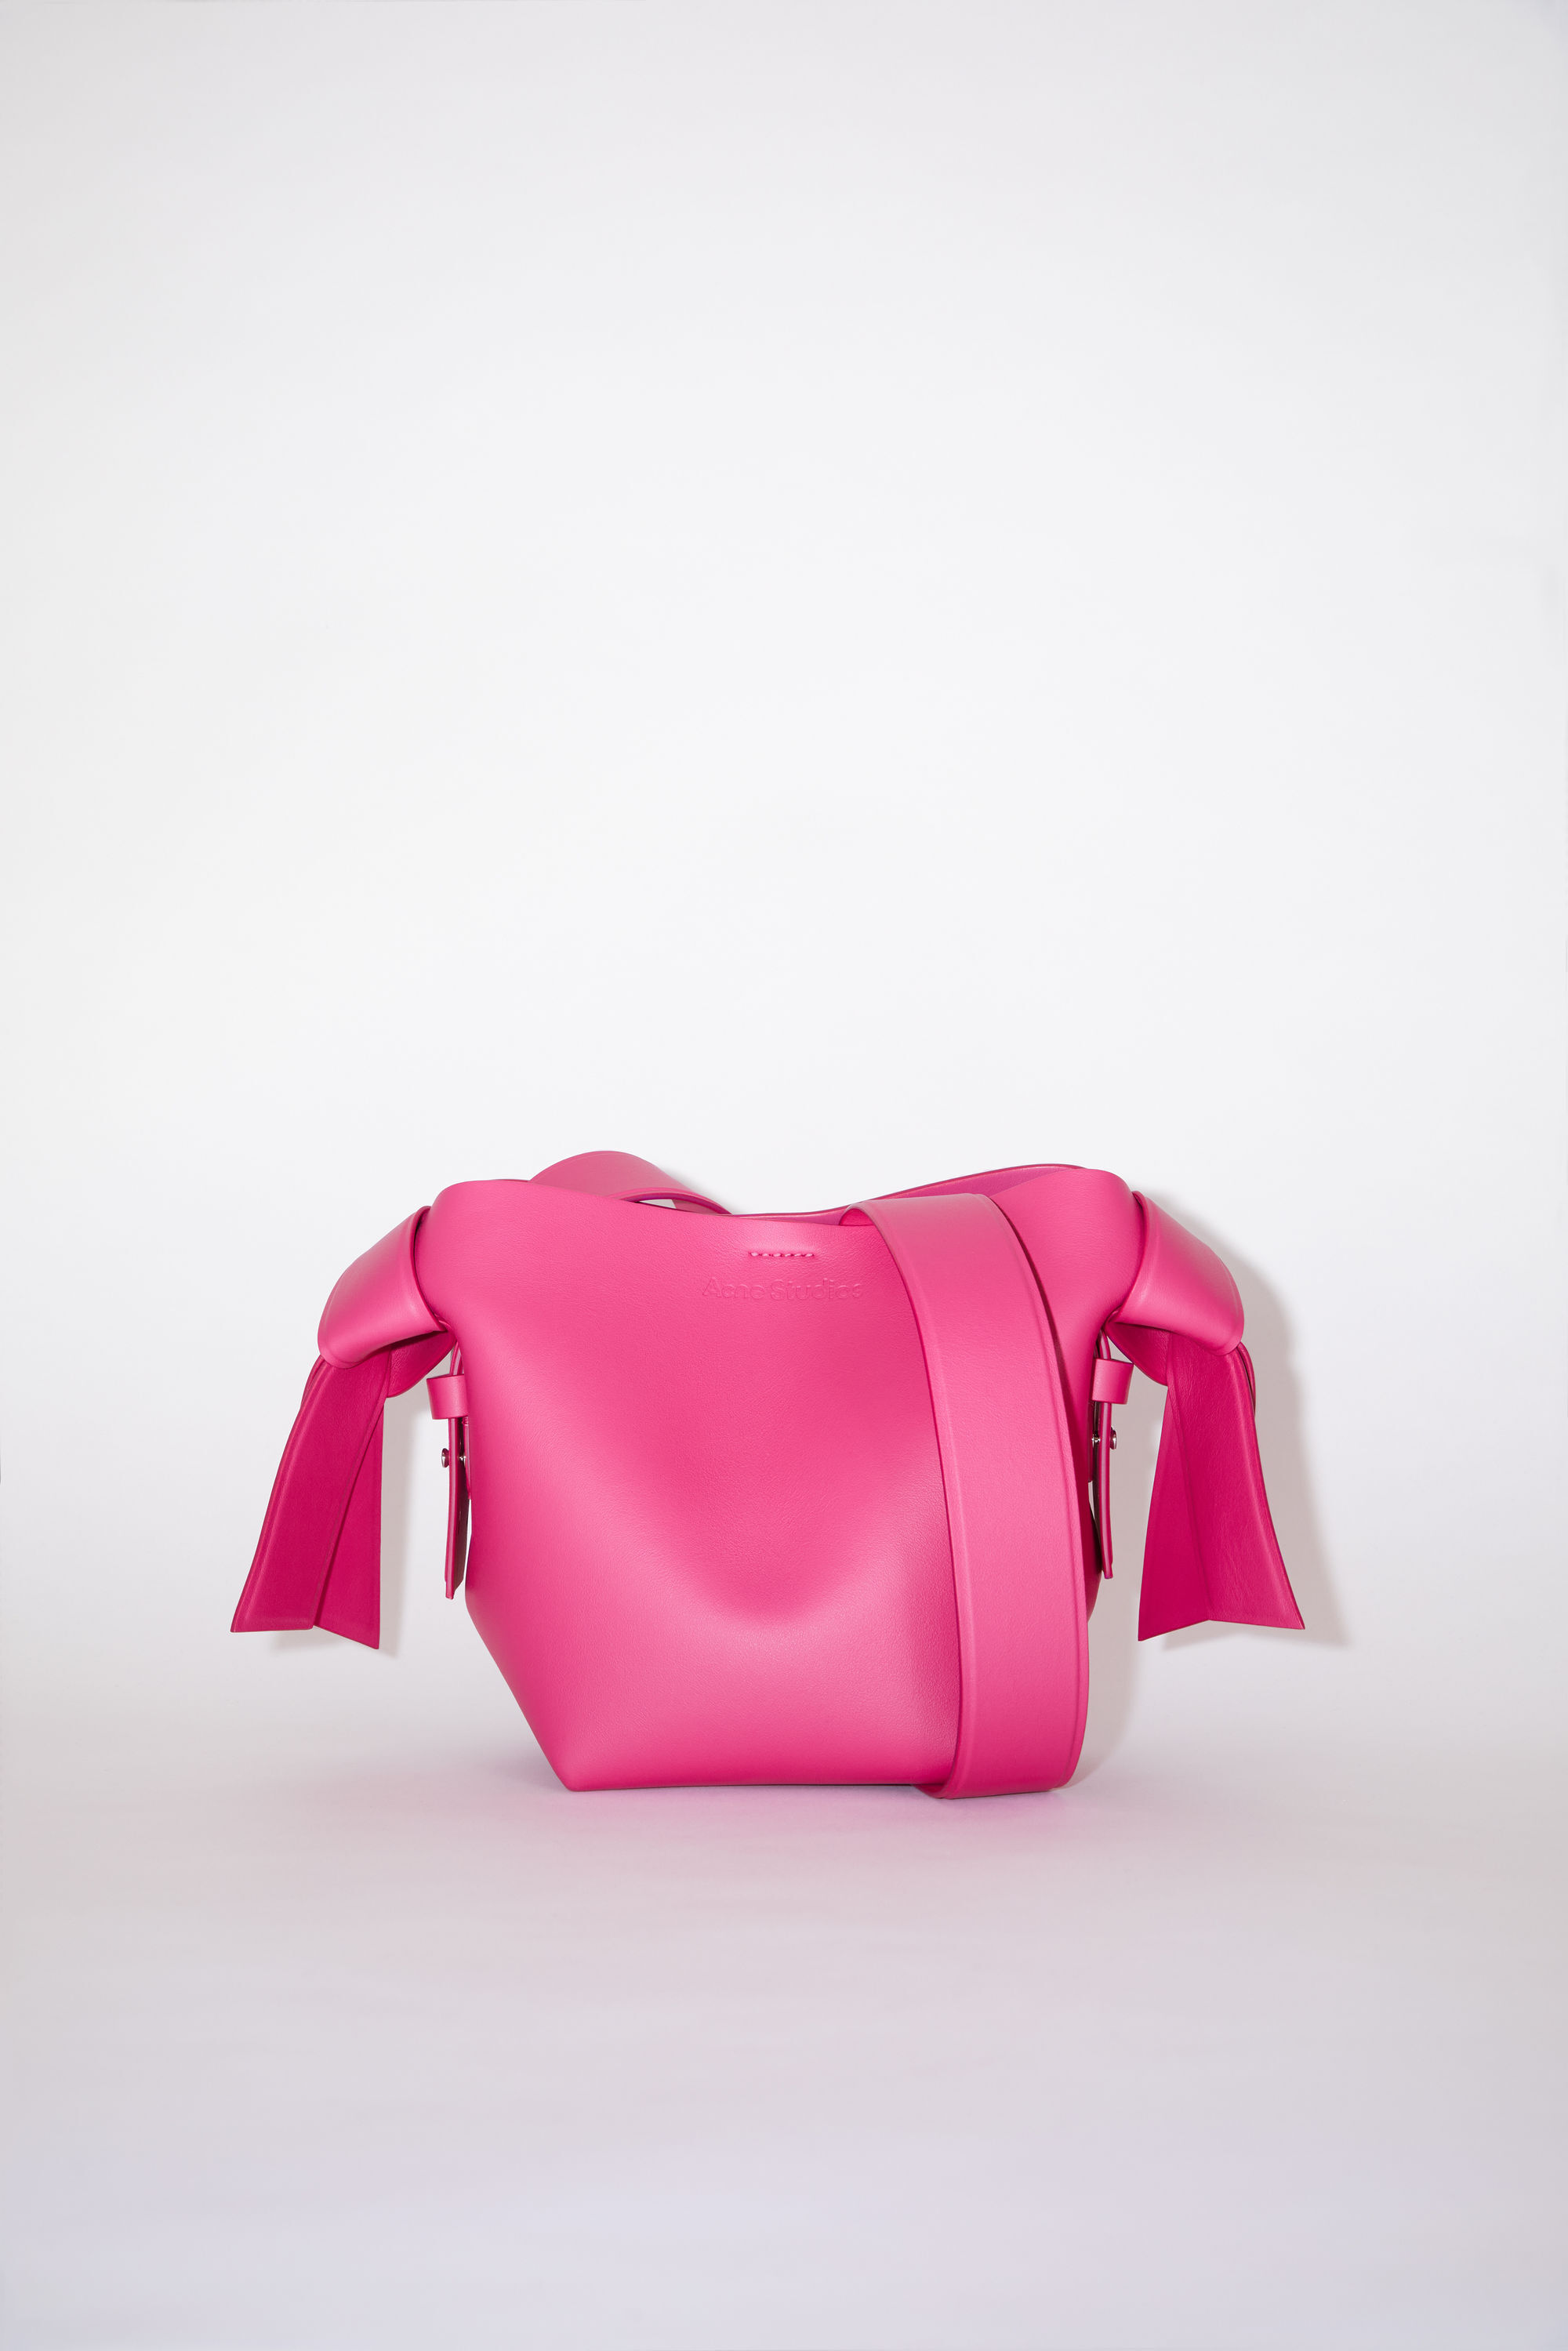 Acne Studios - Musubi mini shoulder bag - Fuchsia pink